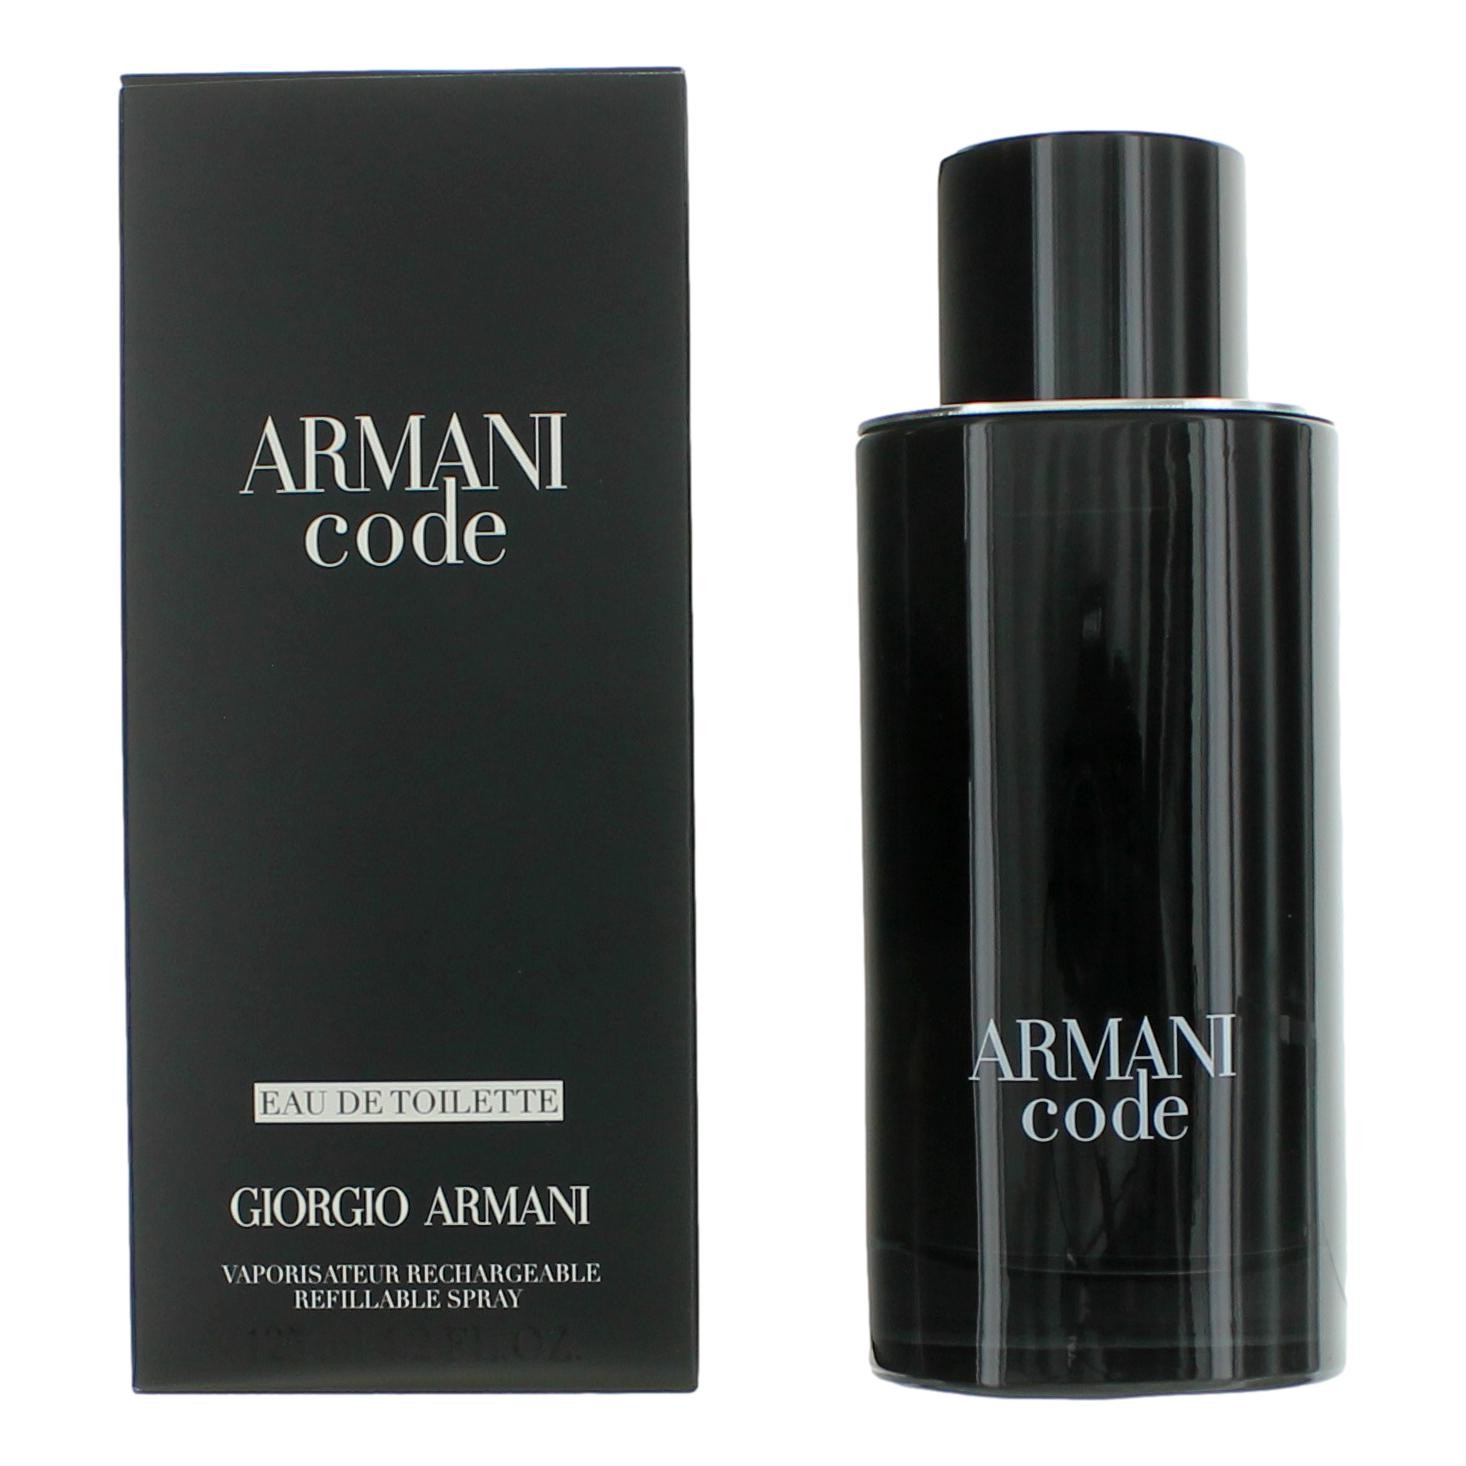 Armani Code by Giorgio Armani 4.2 oz Eau De Toilette Refillable Spray for Men